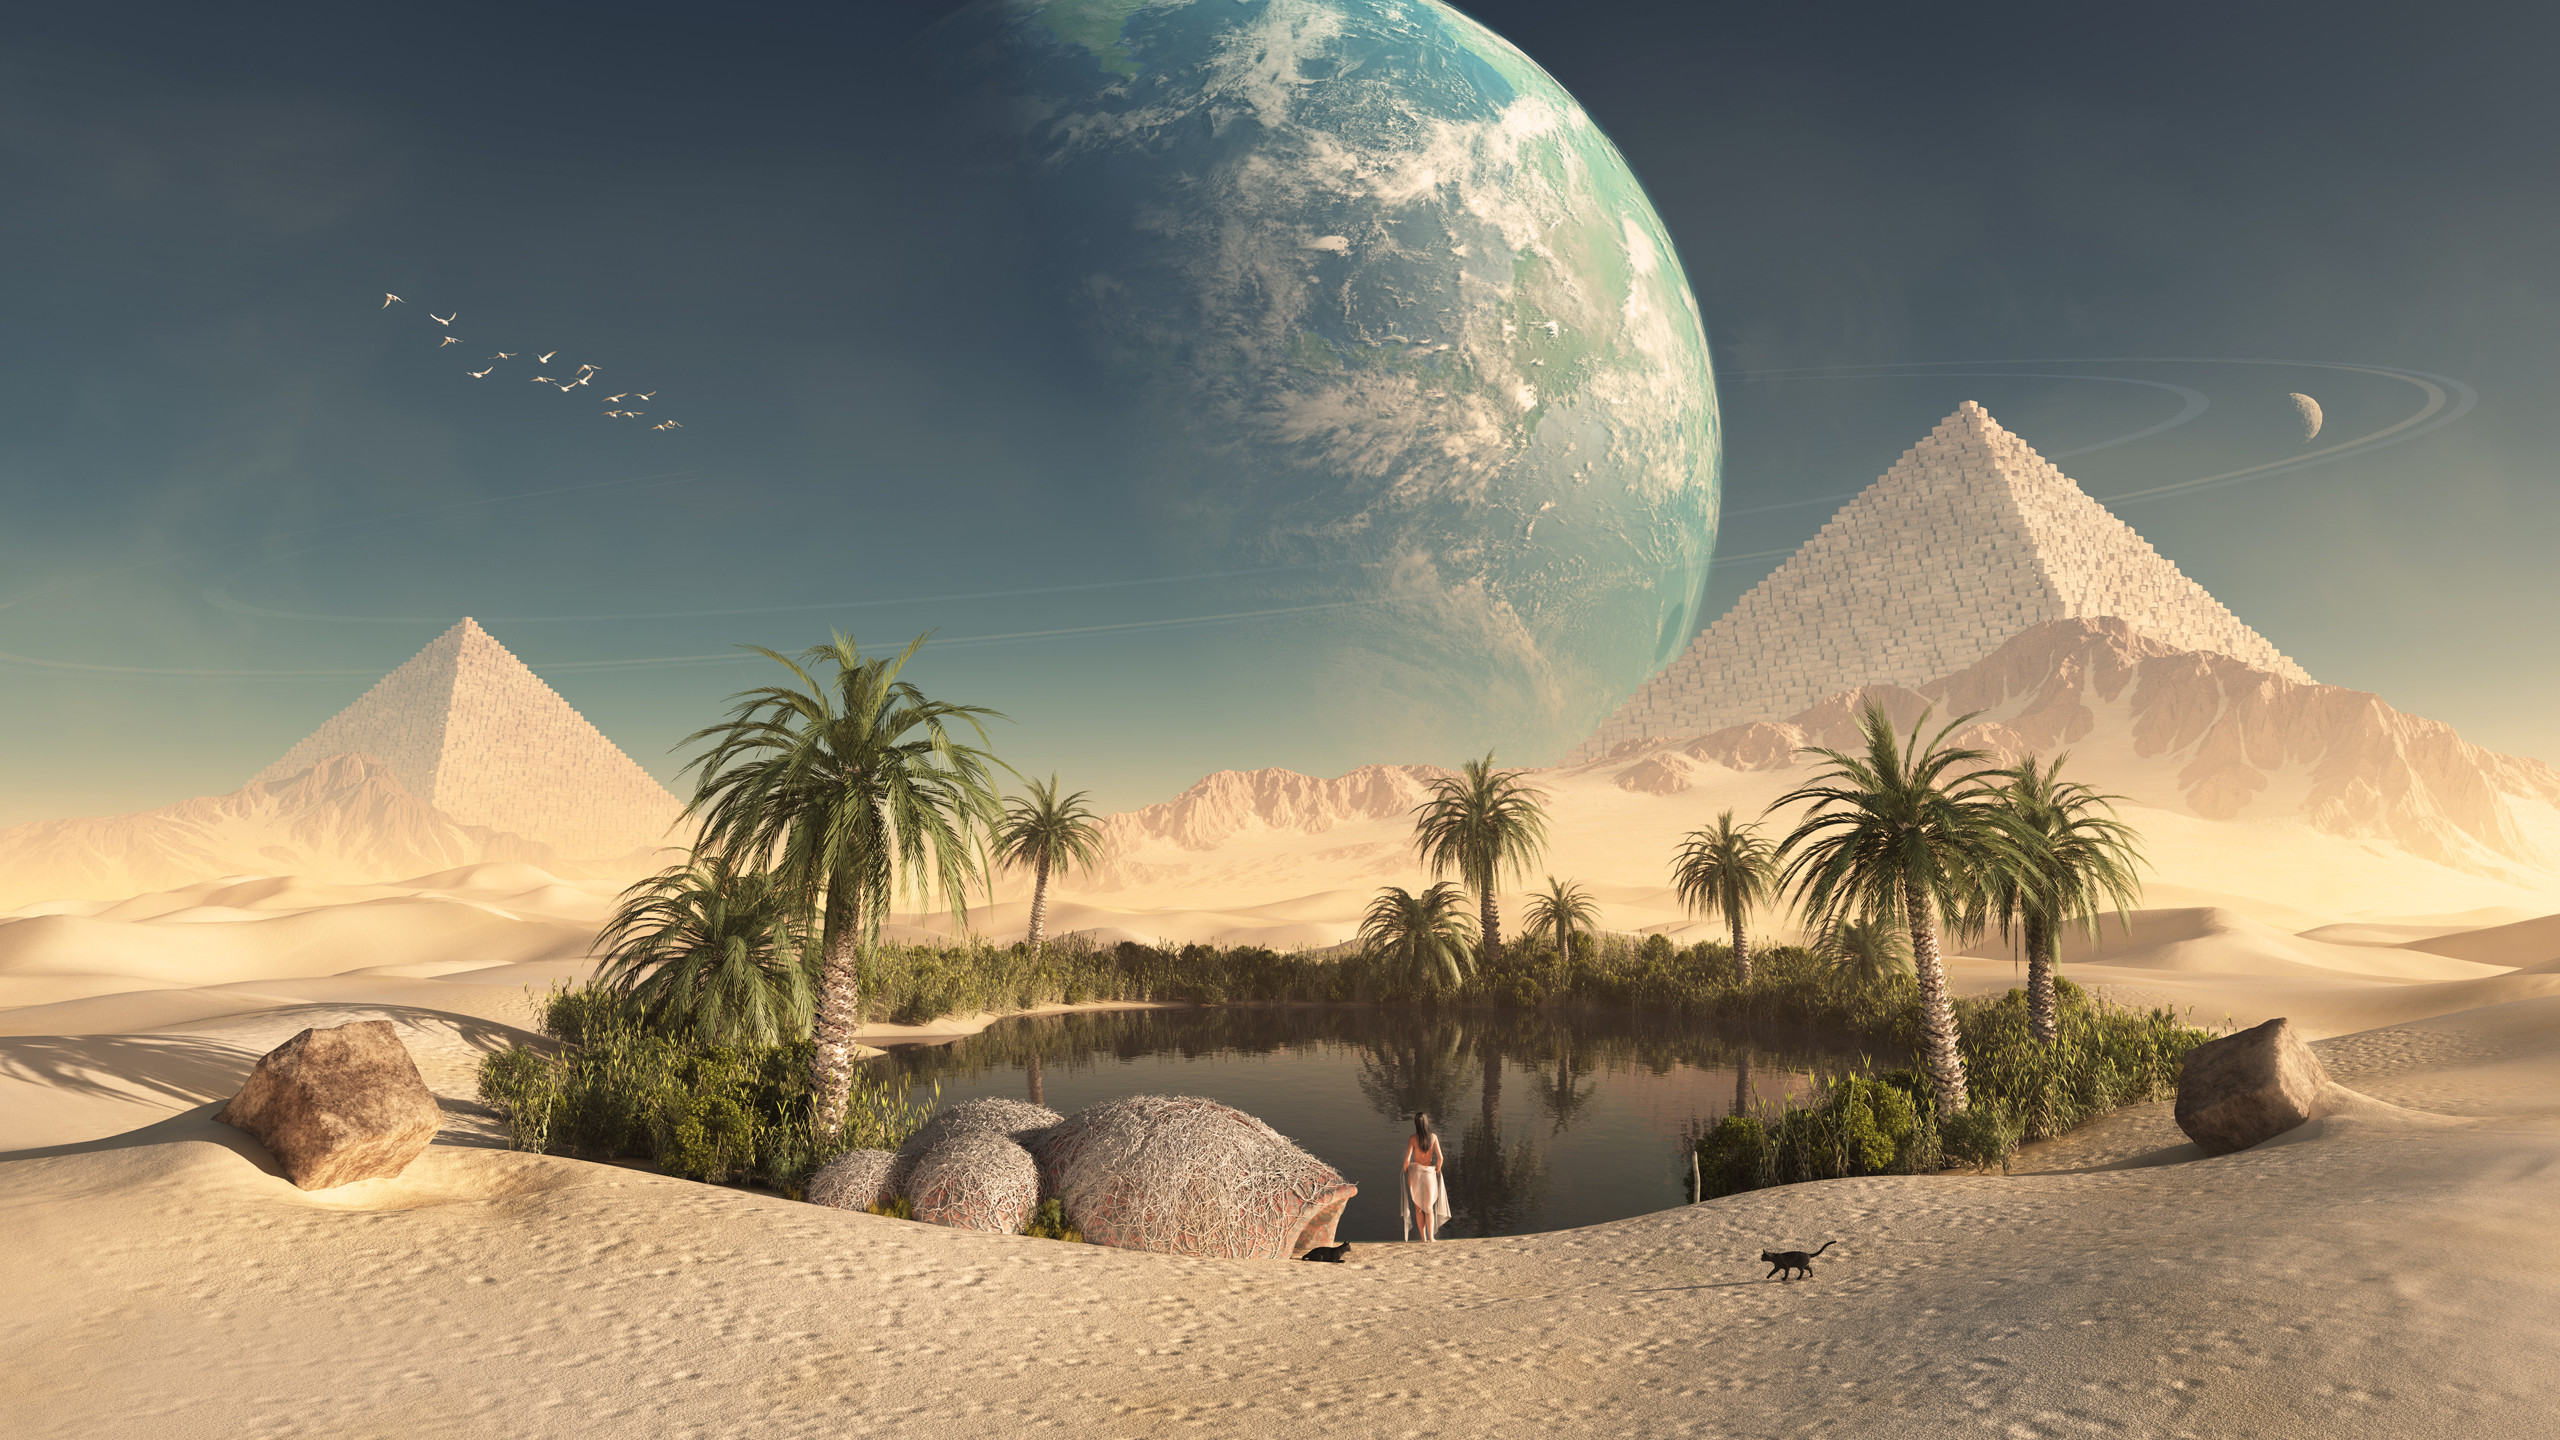 Egyptian desktop wallpaper pictures